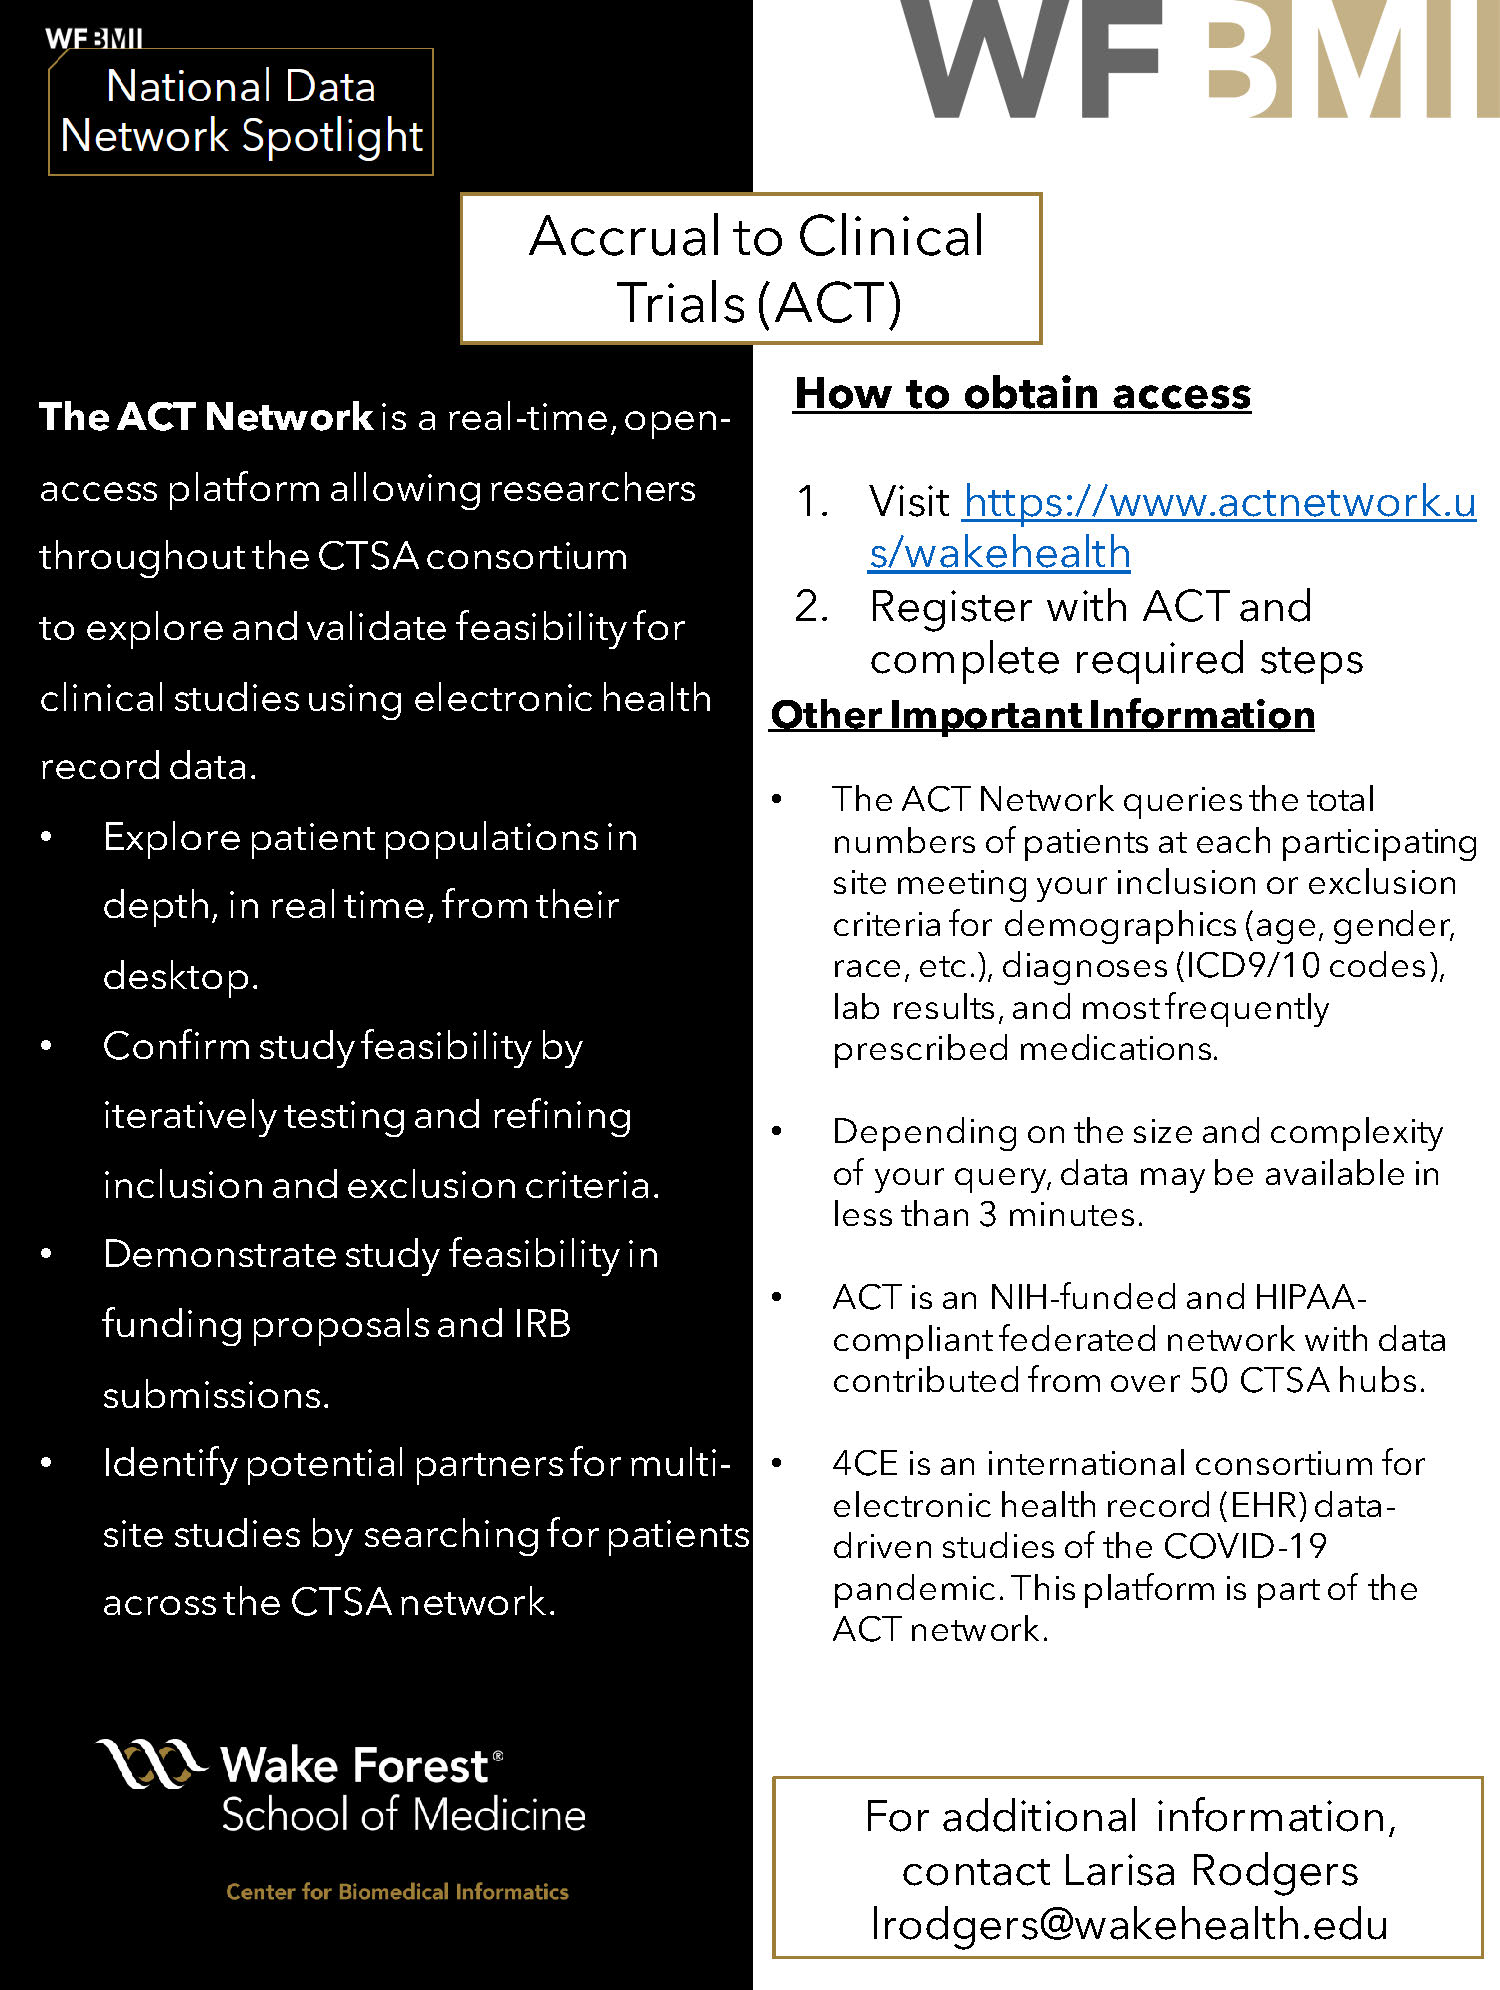 ACT Network Spotlight